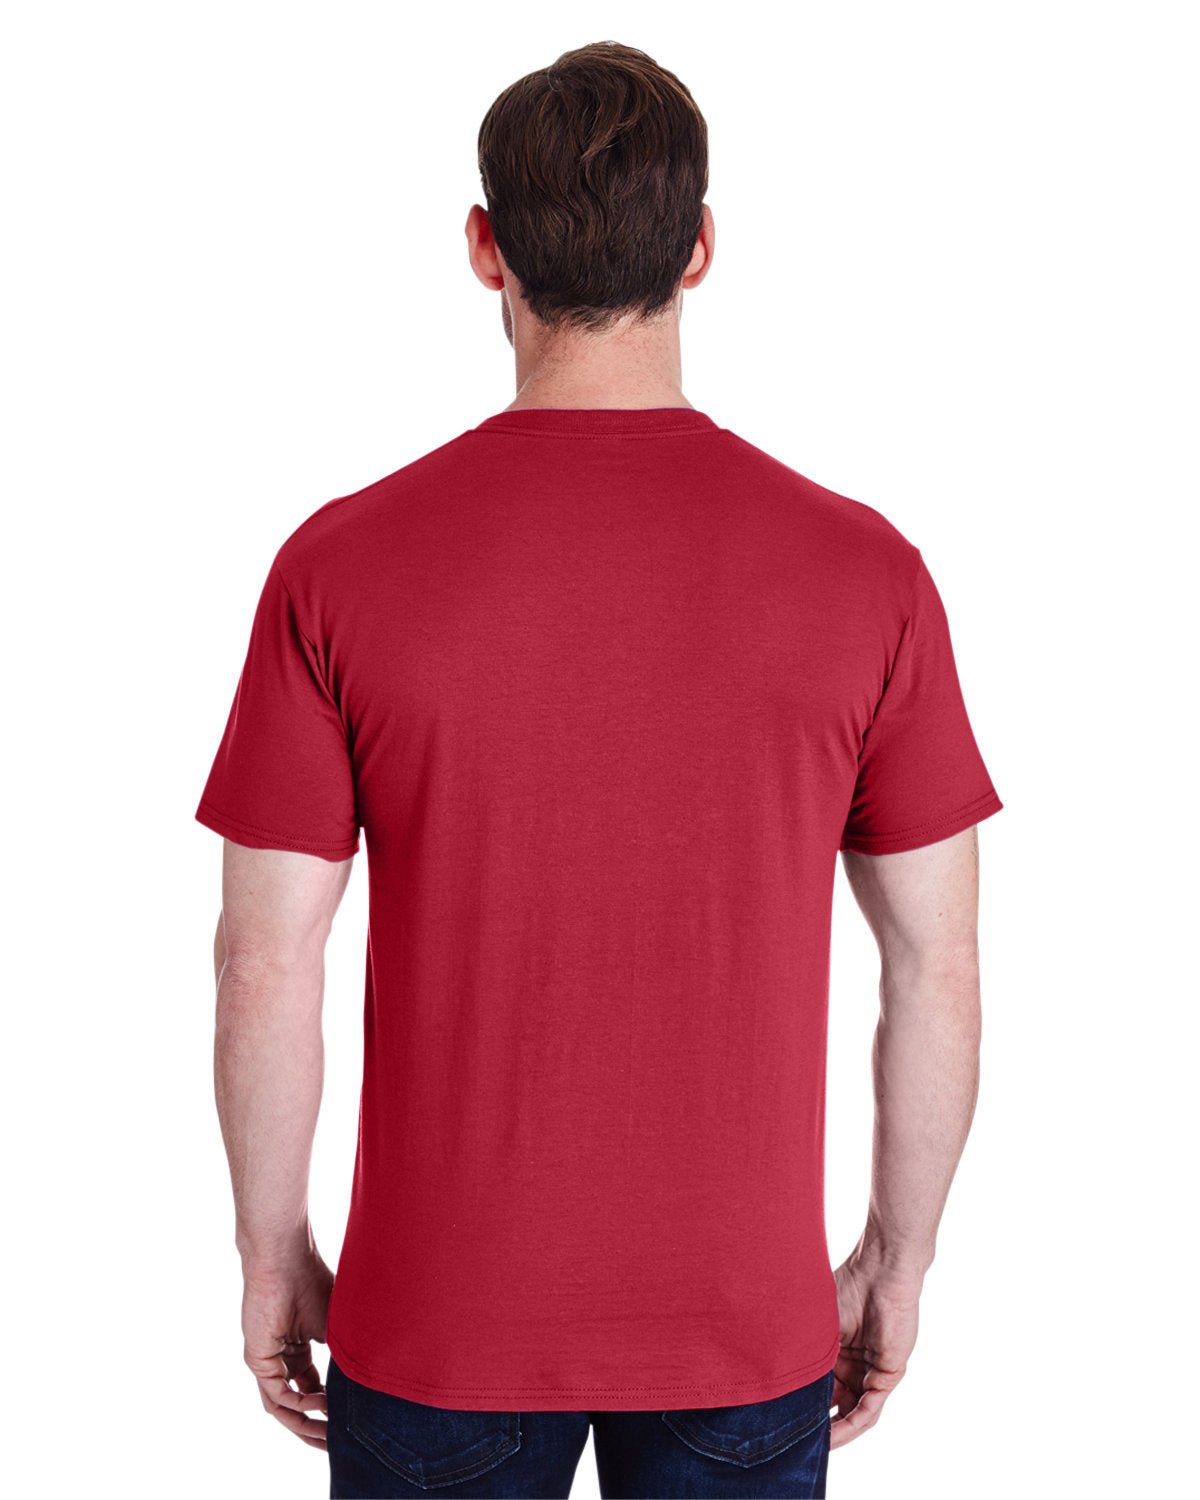 460R-Jerzees-TRUE RED-Jerzees-T-Shirts-2